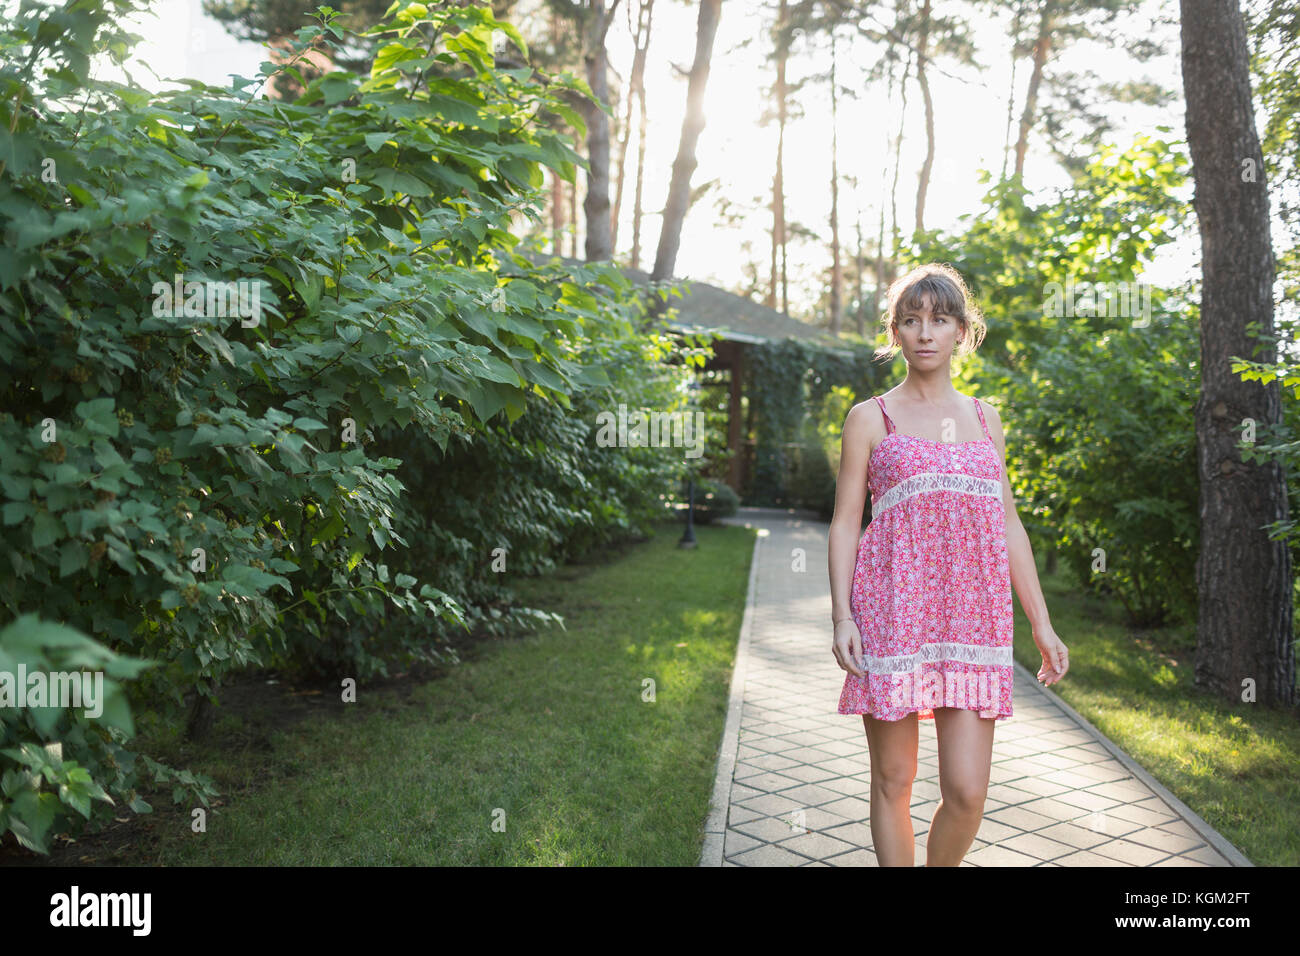 Woman wearing pink dress walking on pathway amidst plants in yard Stock Photo